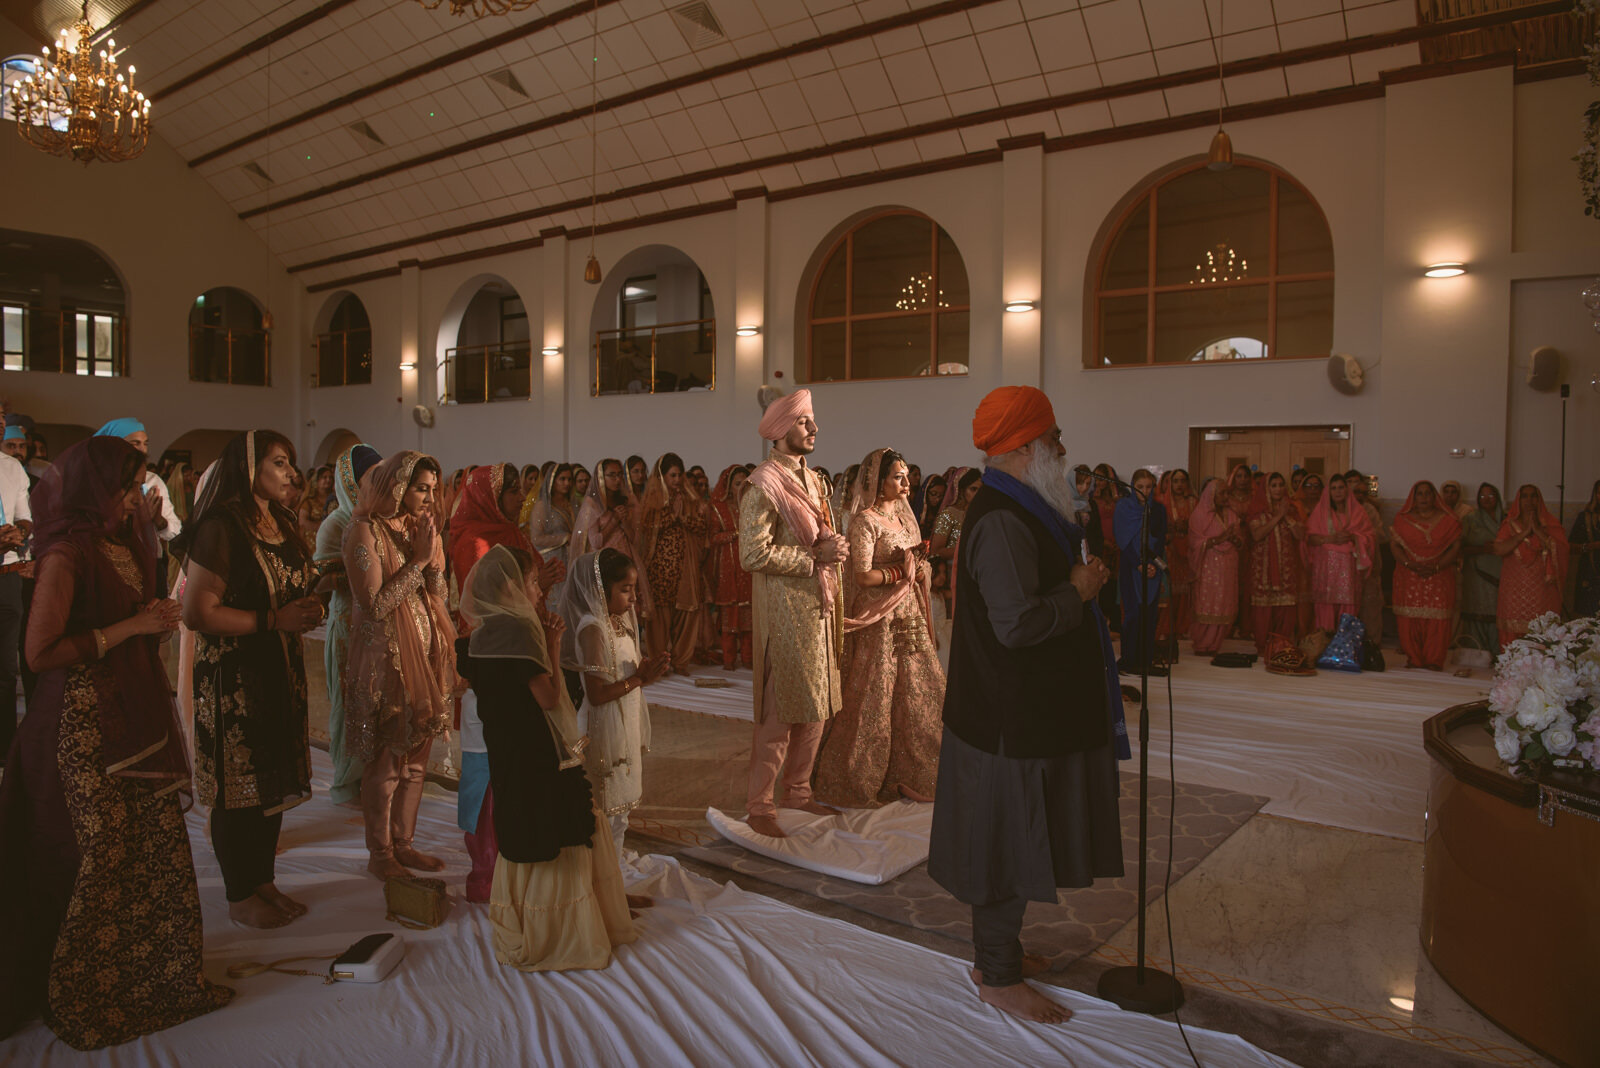 Sikh weddings at Guru Nanak Gurdwara Smethwick-3.jpg